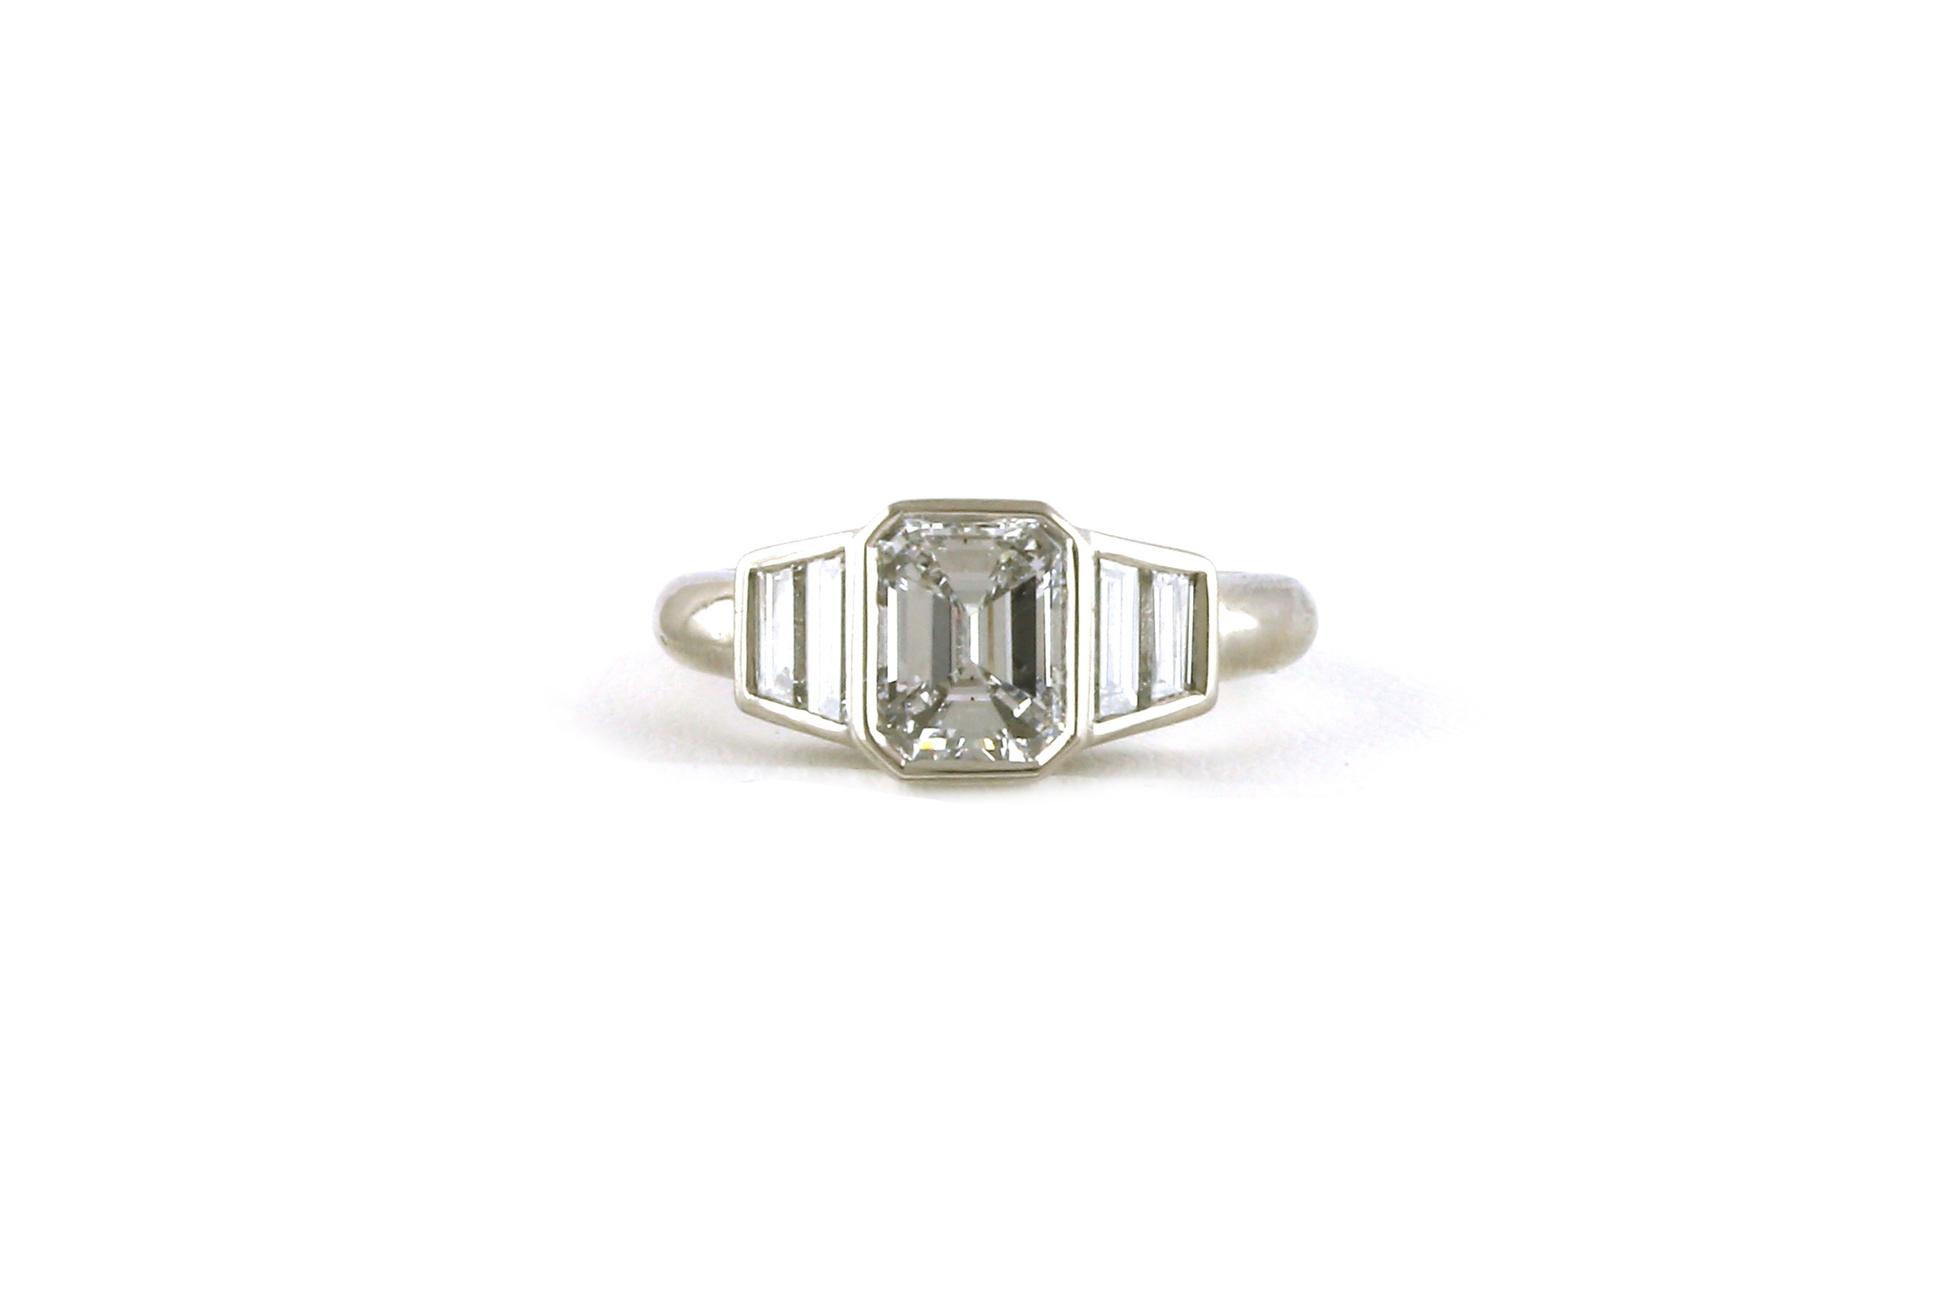 3-Stone Style Bezel-set Diamond Ring in Platinum (2.11cts TWT)